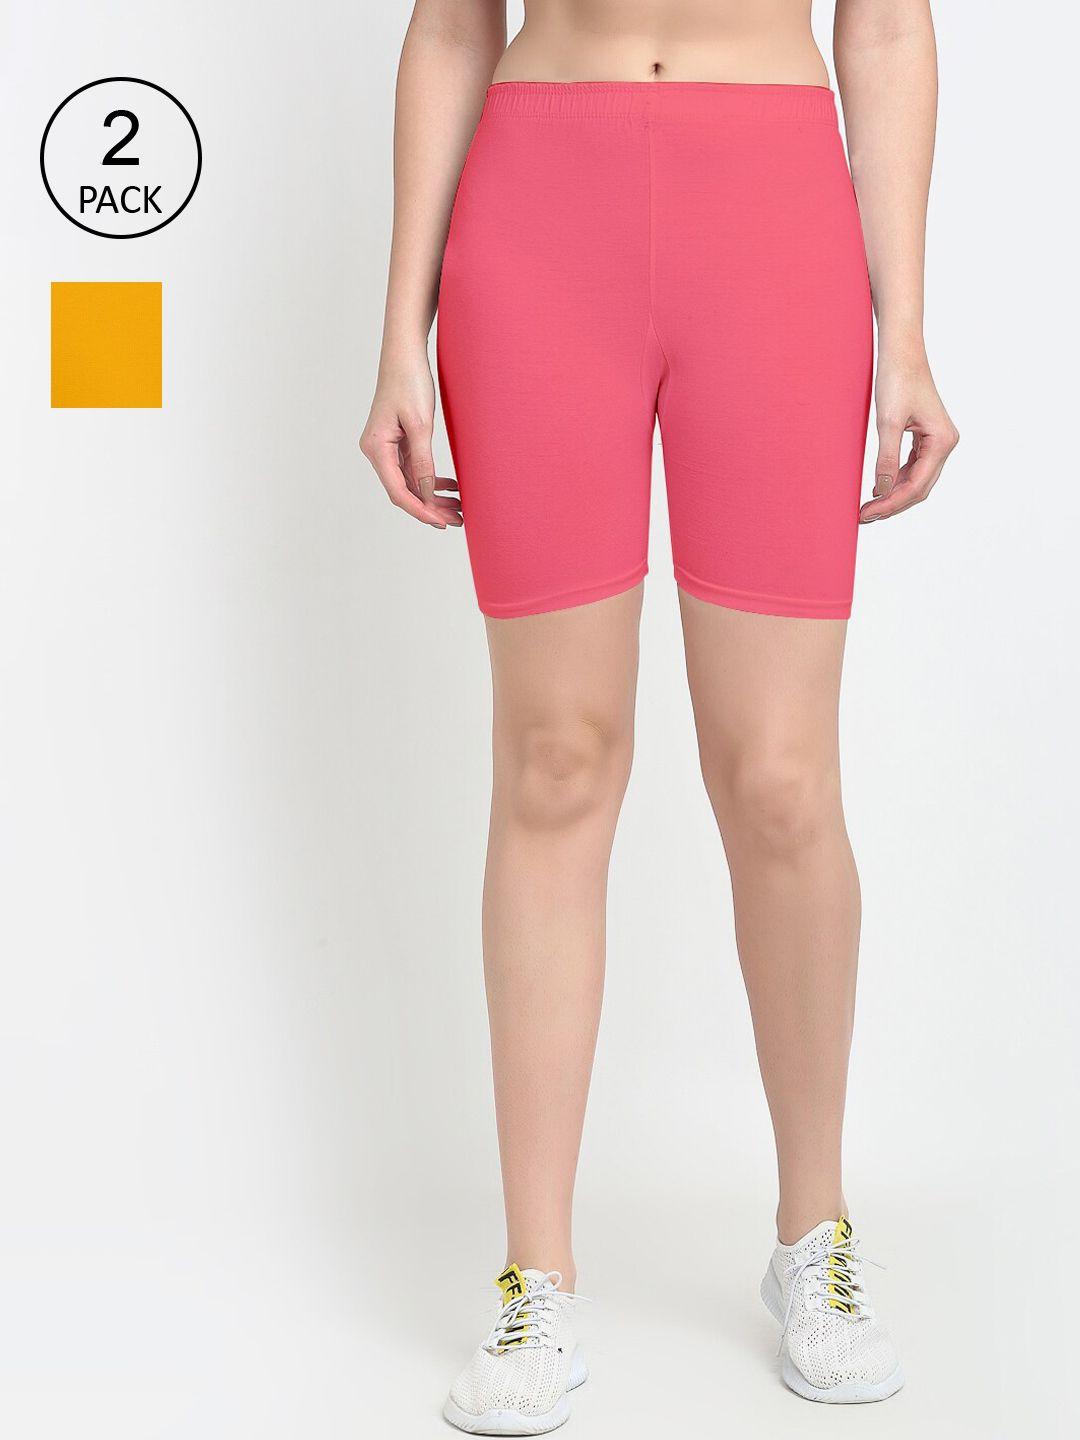 gracit women orange cycling sports shorts